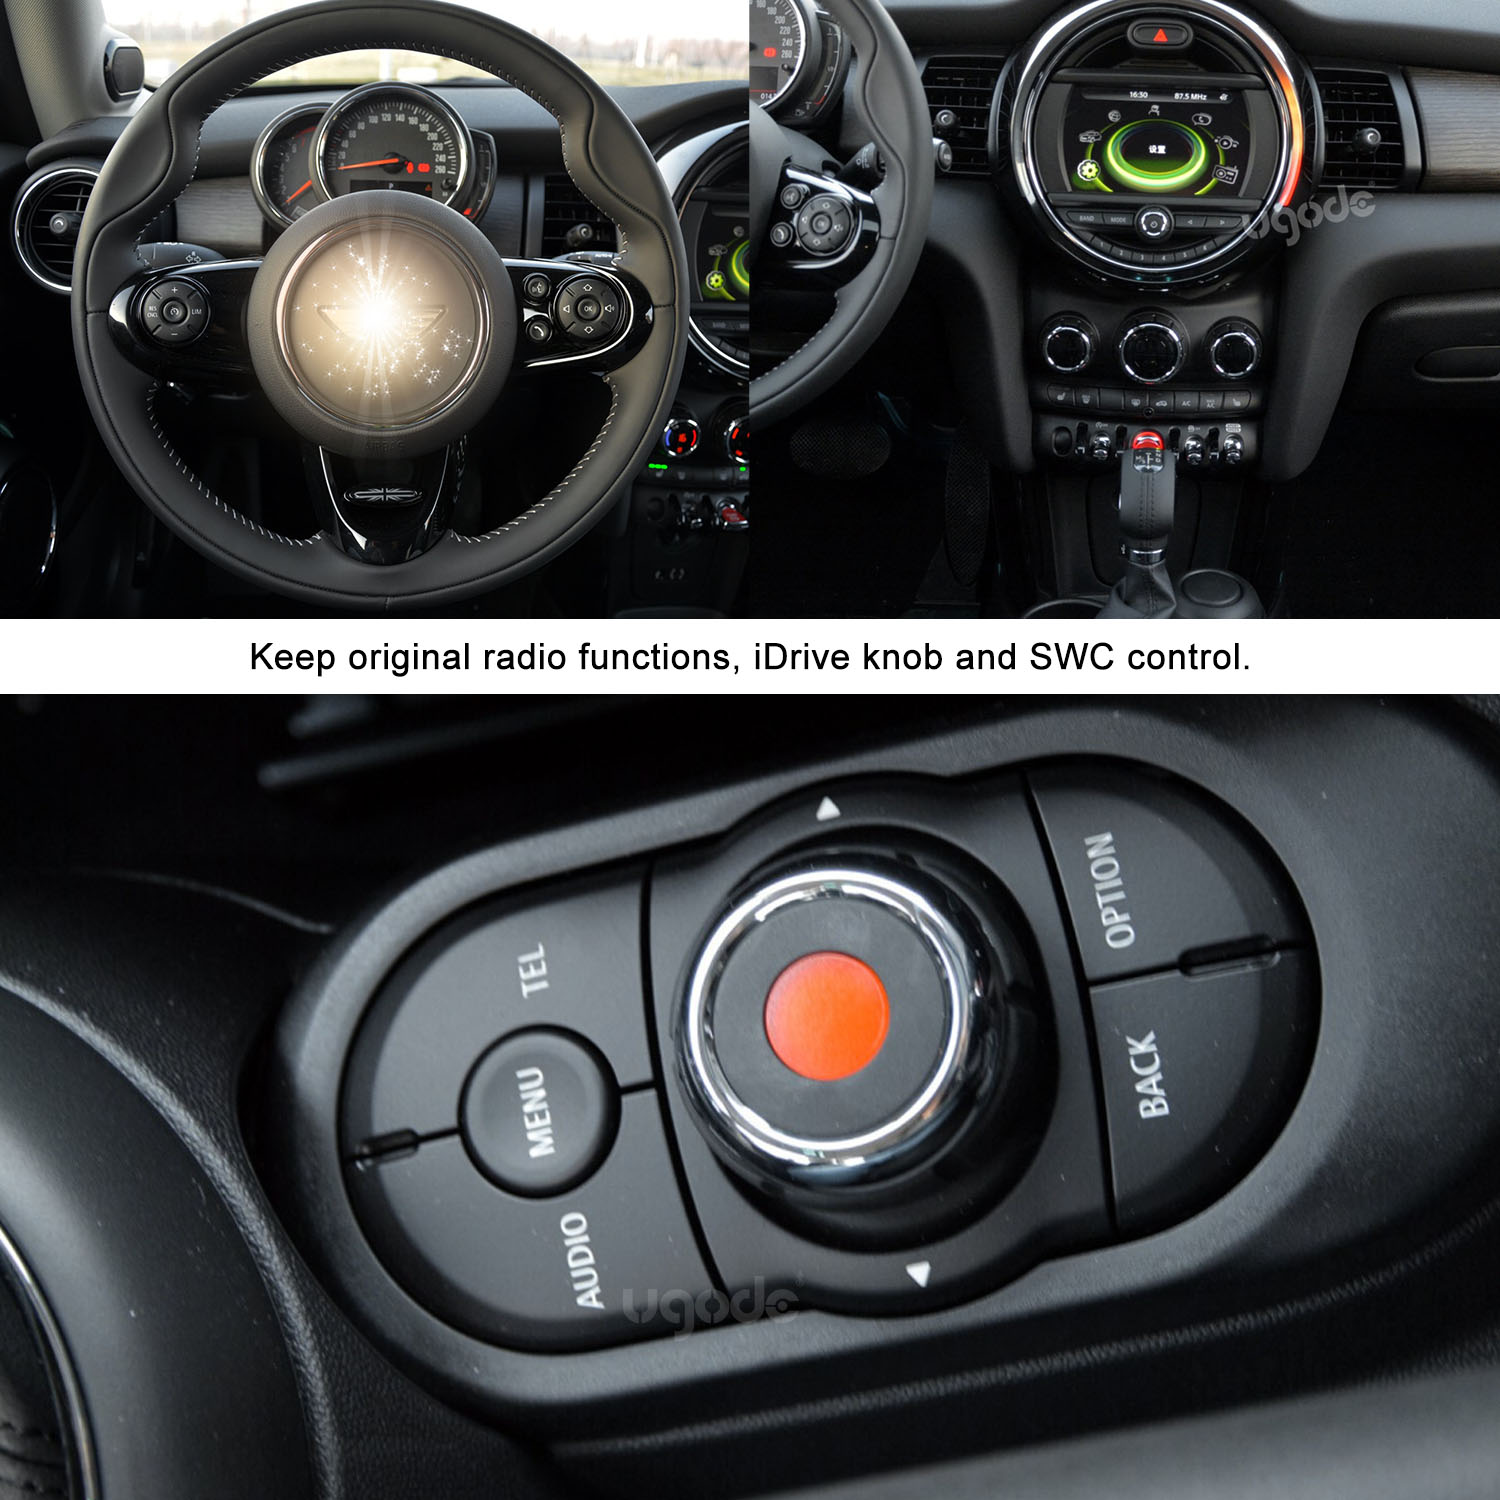 Autoradio GPS Mini Cooper F56 F55 Apple Carplay Android Auto